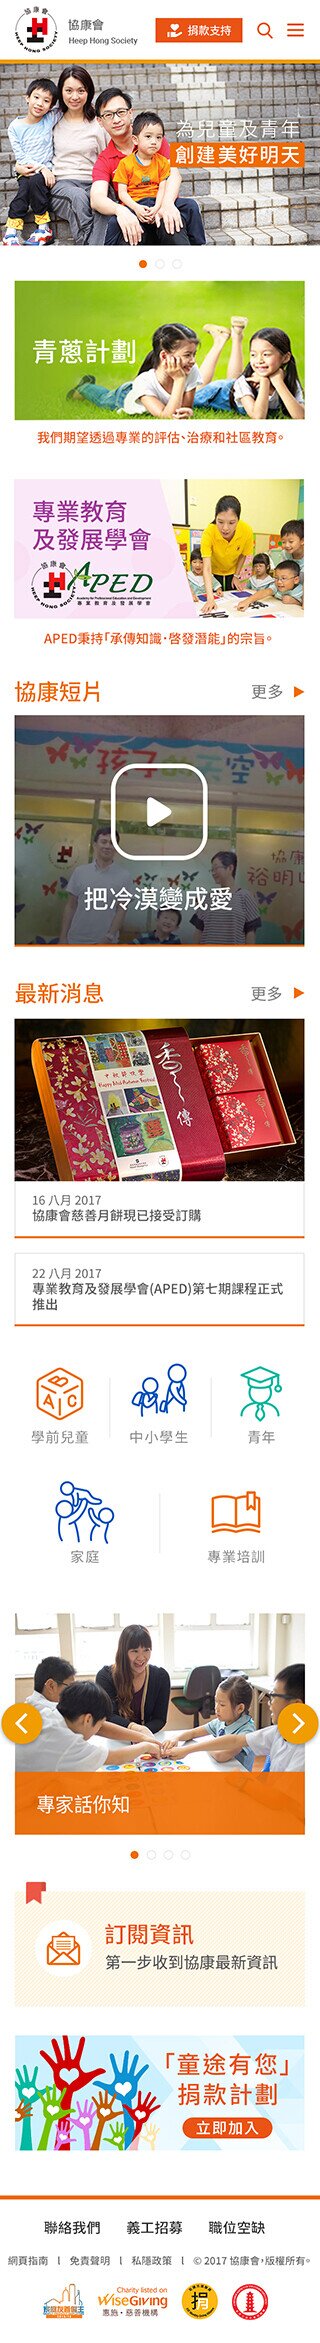 Heep Hong Society website screenshot for mobile version 1 of 5